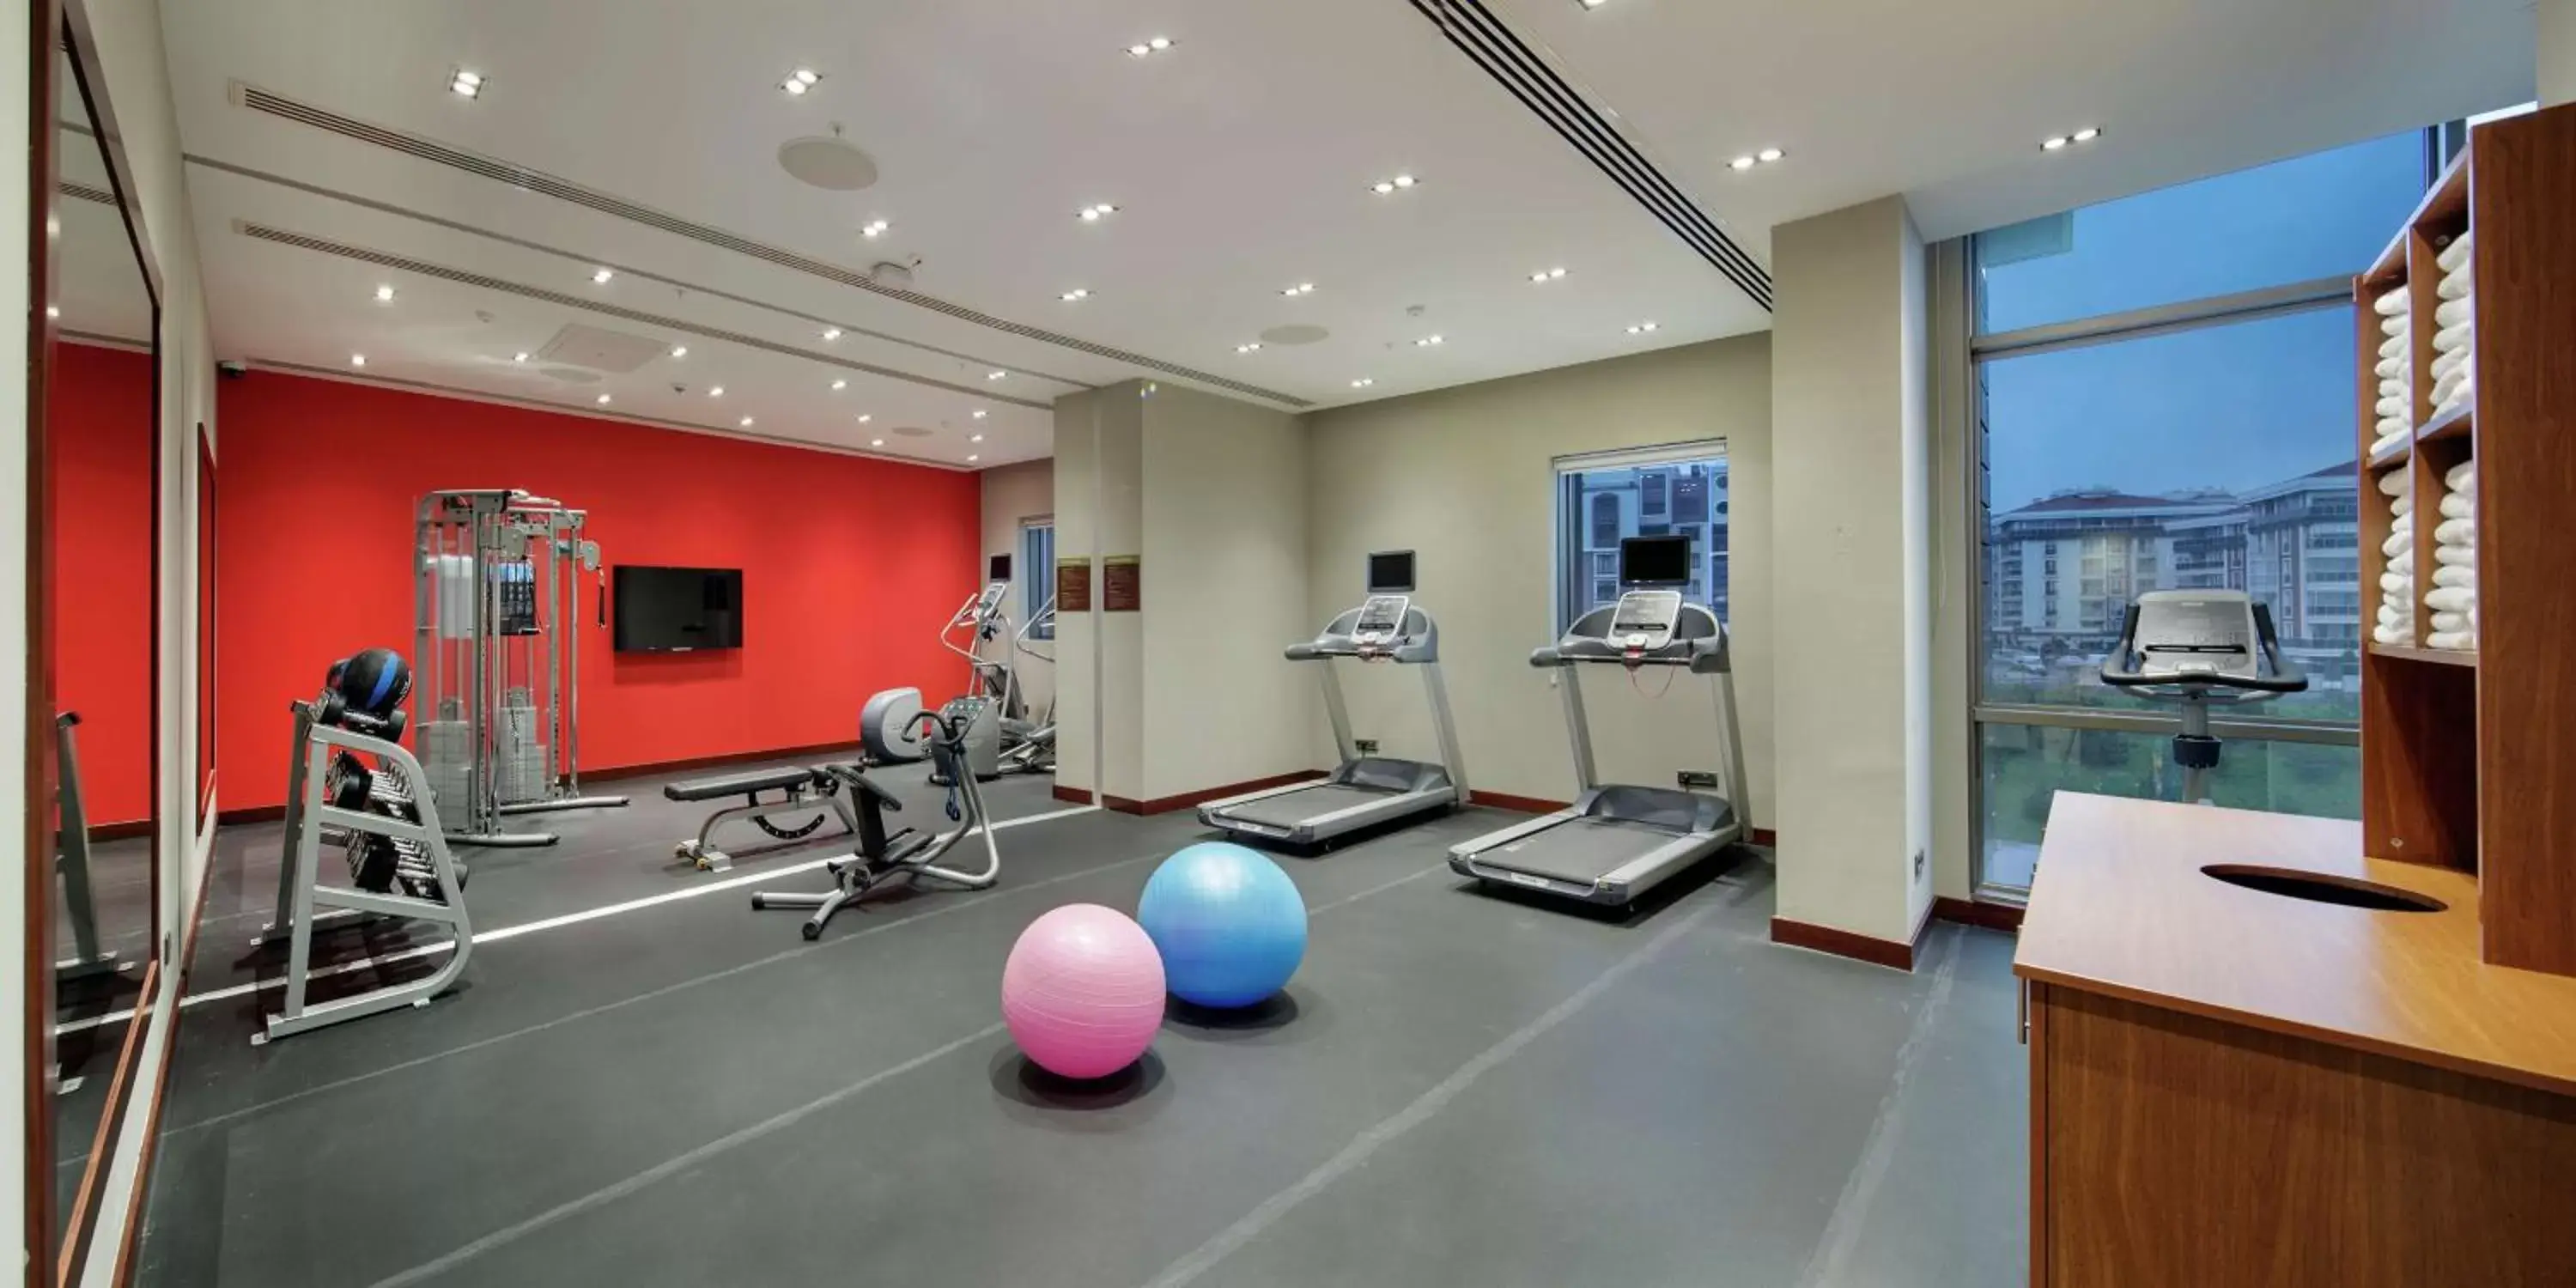 Fitness centre/facilities, Fitness Center/Facilities in Hilton Garden Inn Corlu